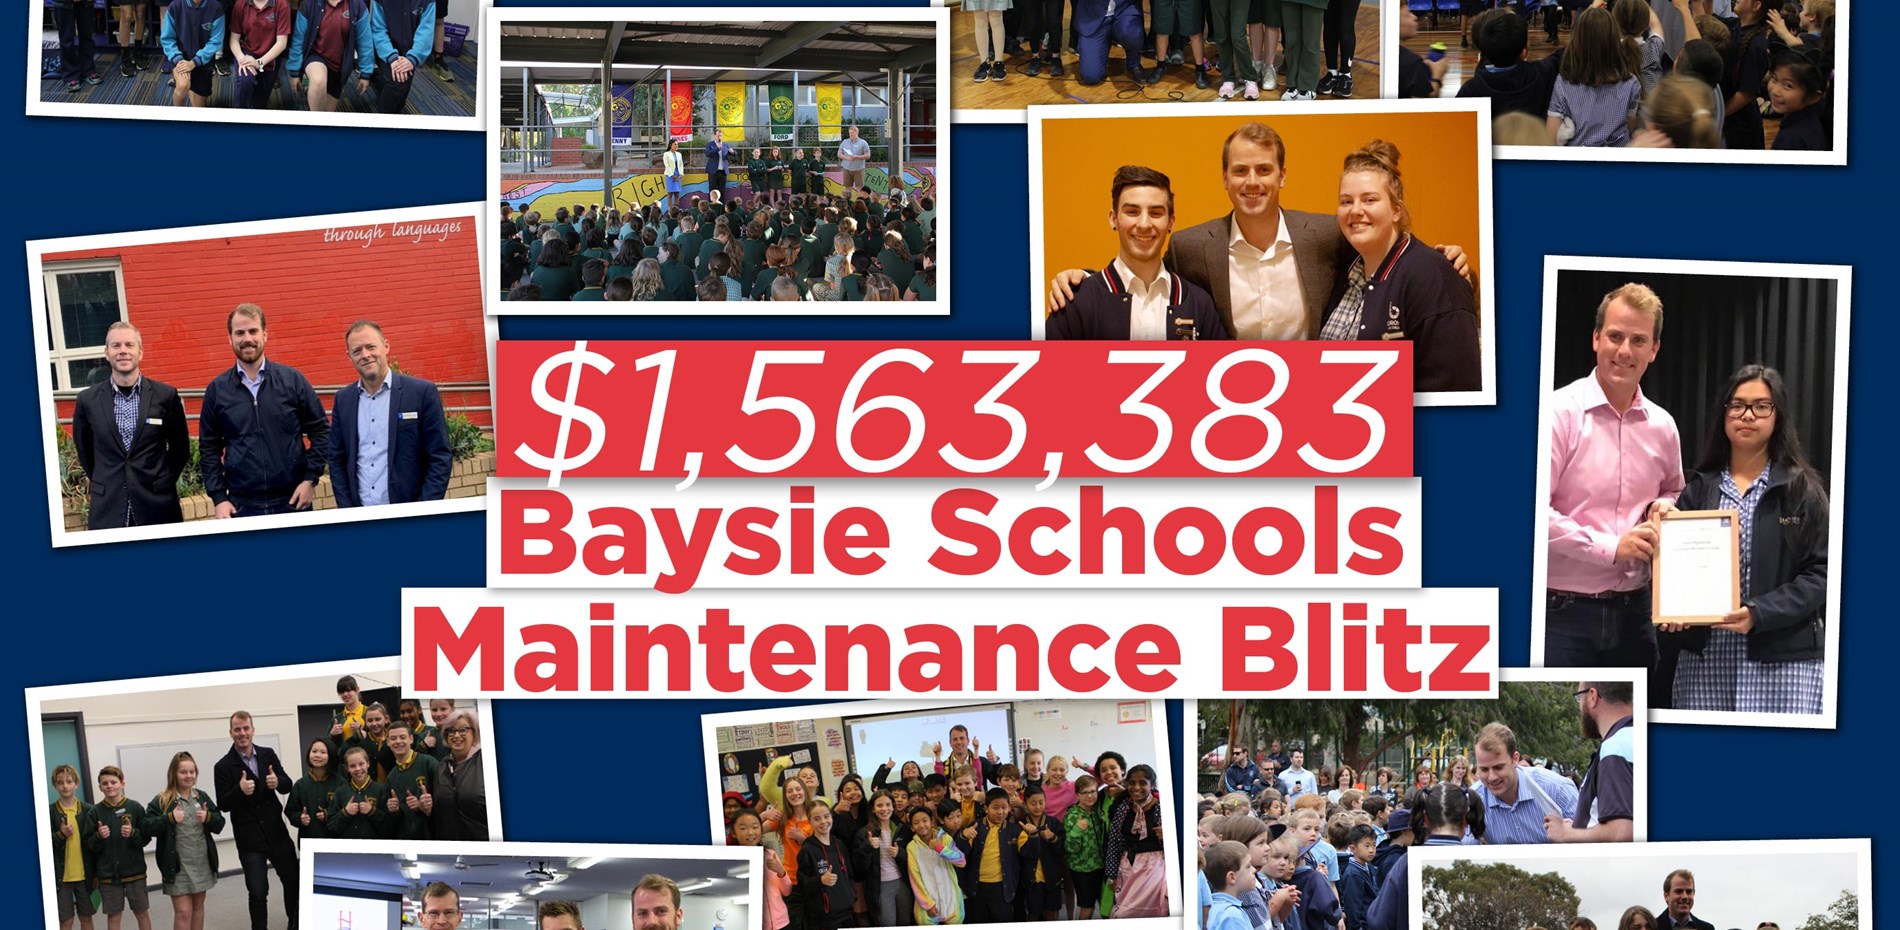 BAYSWATER SCHOOLS TO SHARE IN $515M MAINTENANCE BLITZ  Main Image